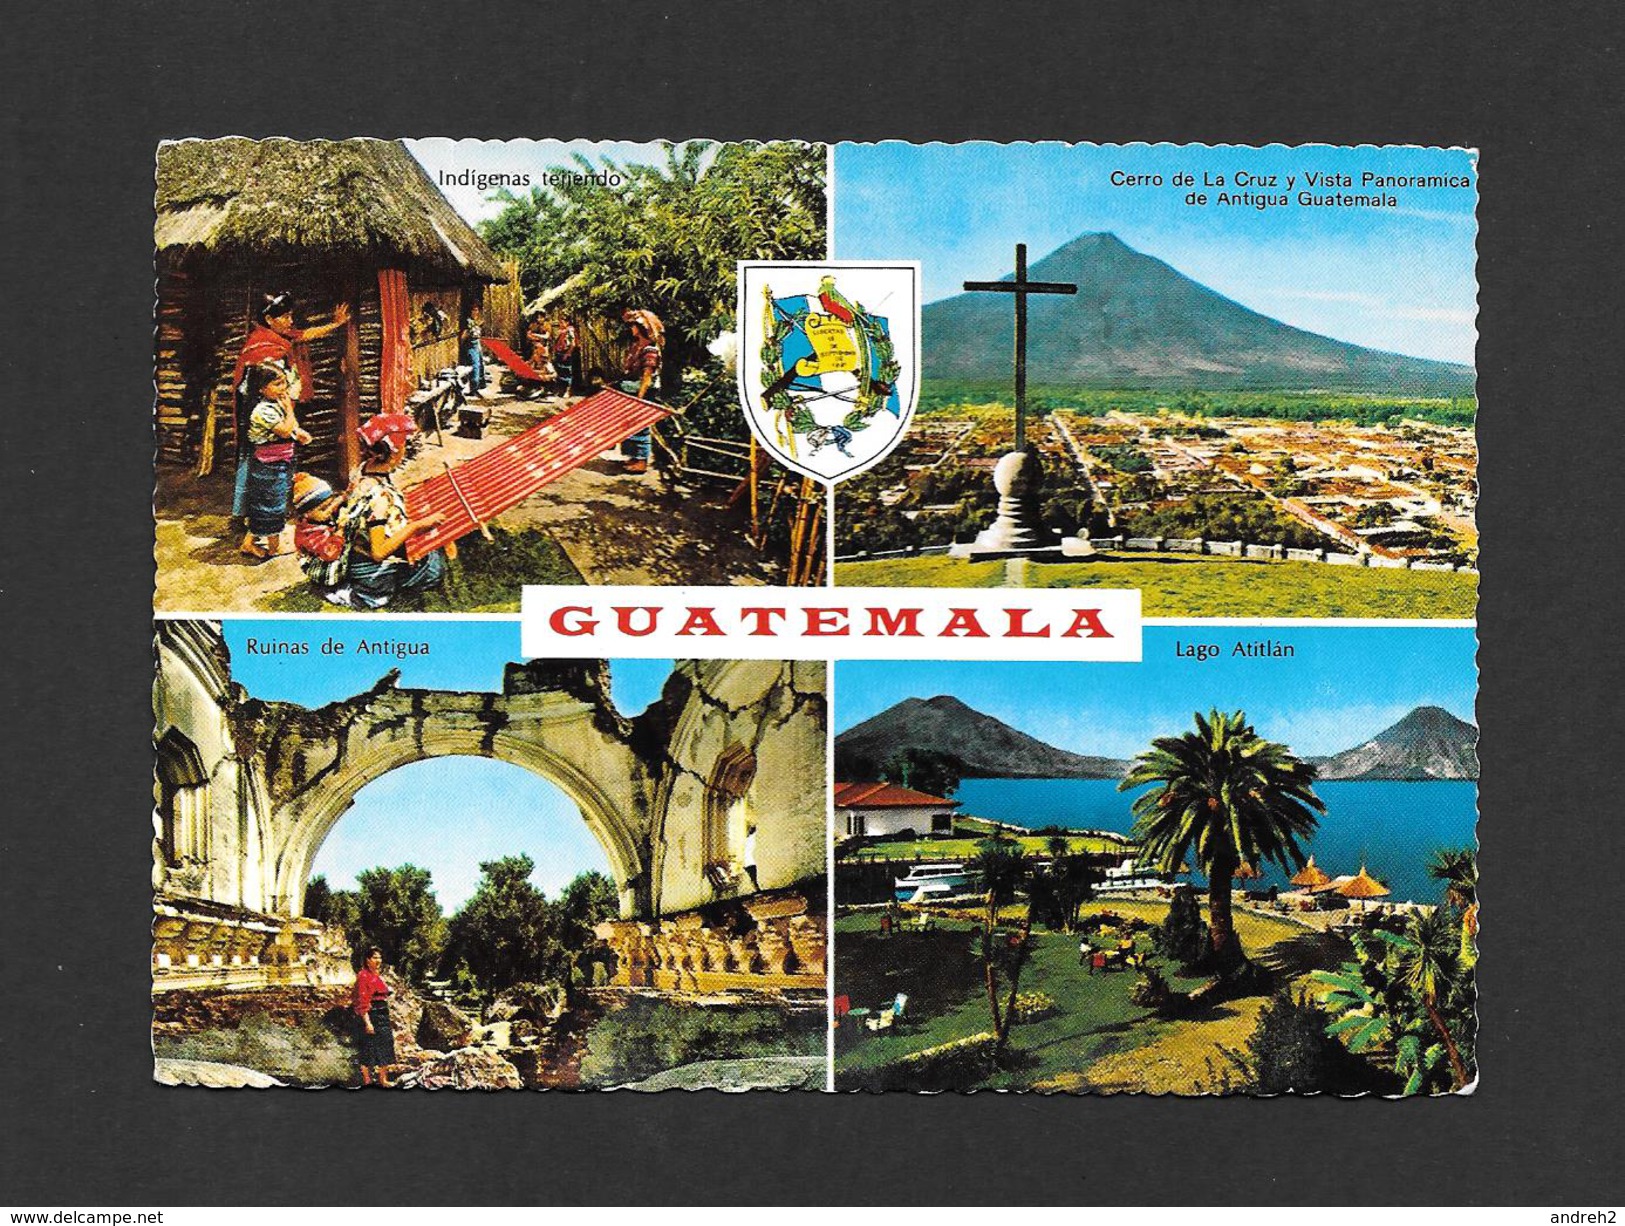 GUATEMALA - RUINAS DE ANTIGUA - CERRO DE LA CRUZ - LAGO ATITLAN - INDIGENAS TEJJENDO - TRÈS BEAU TIMBRE - Guatemala